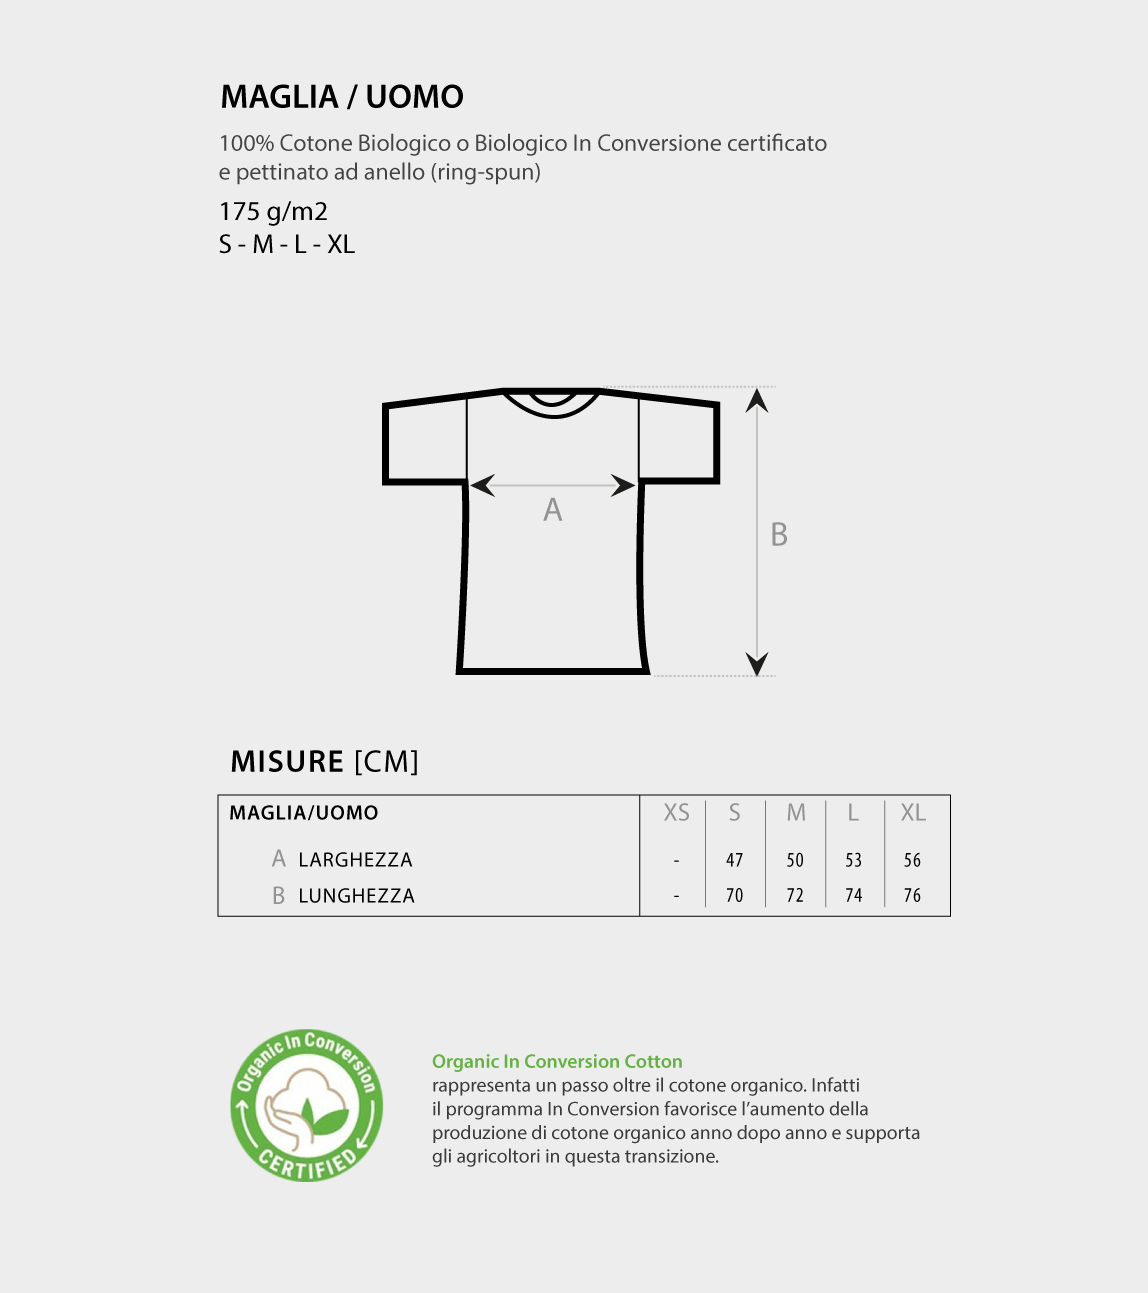 T-Shirt Nera Uomo - Logo Football Player